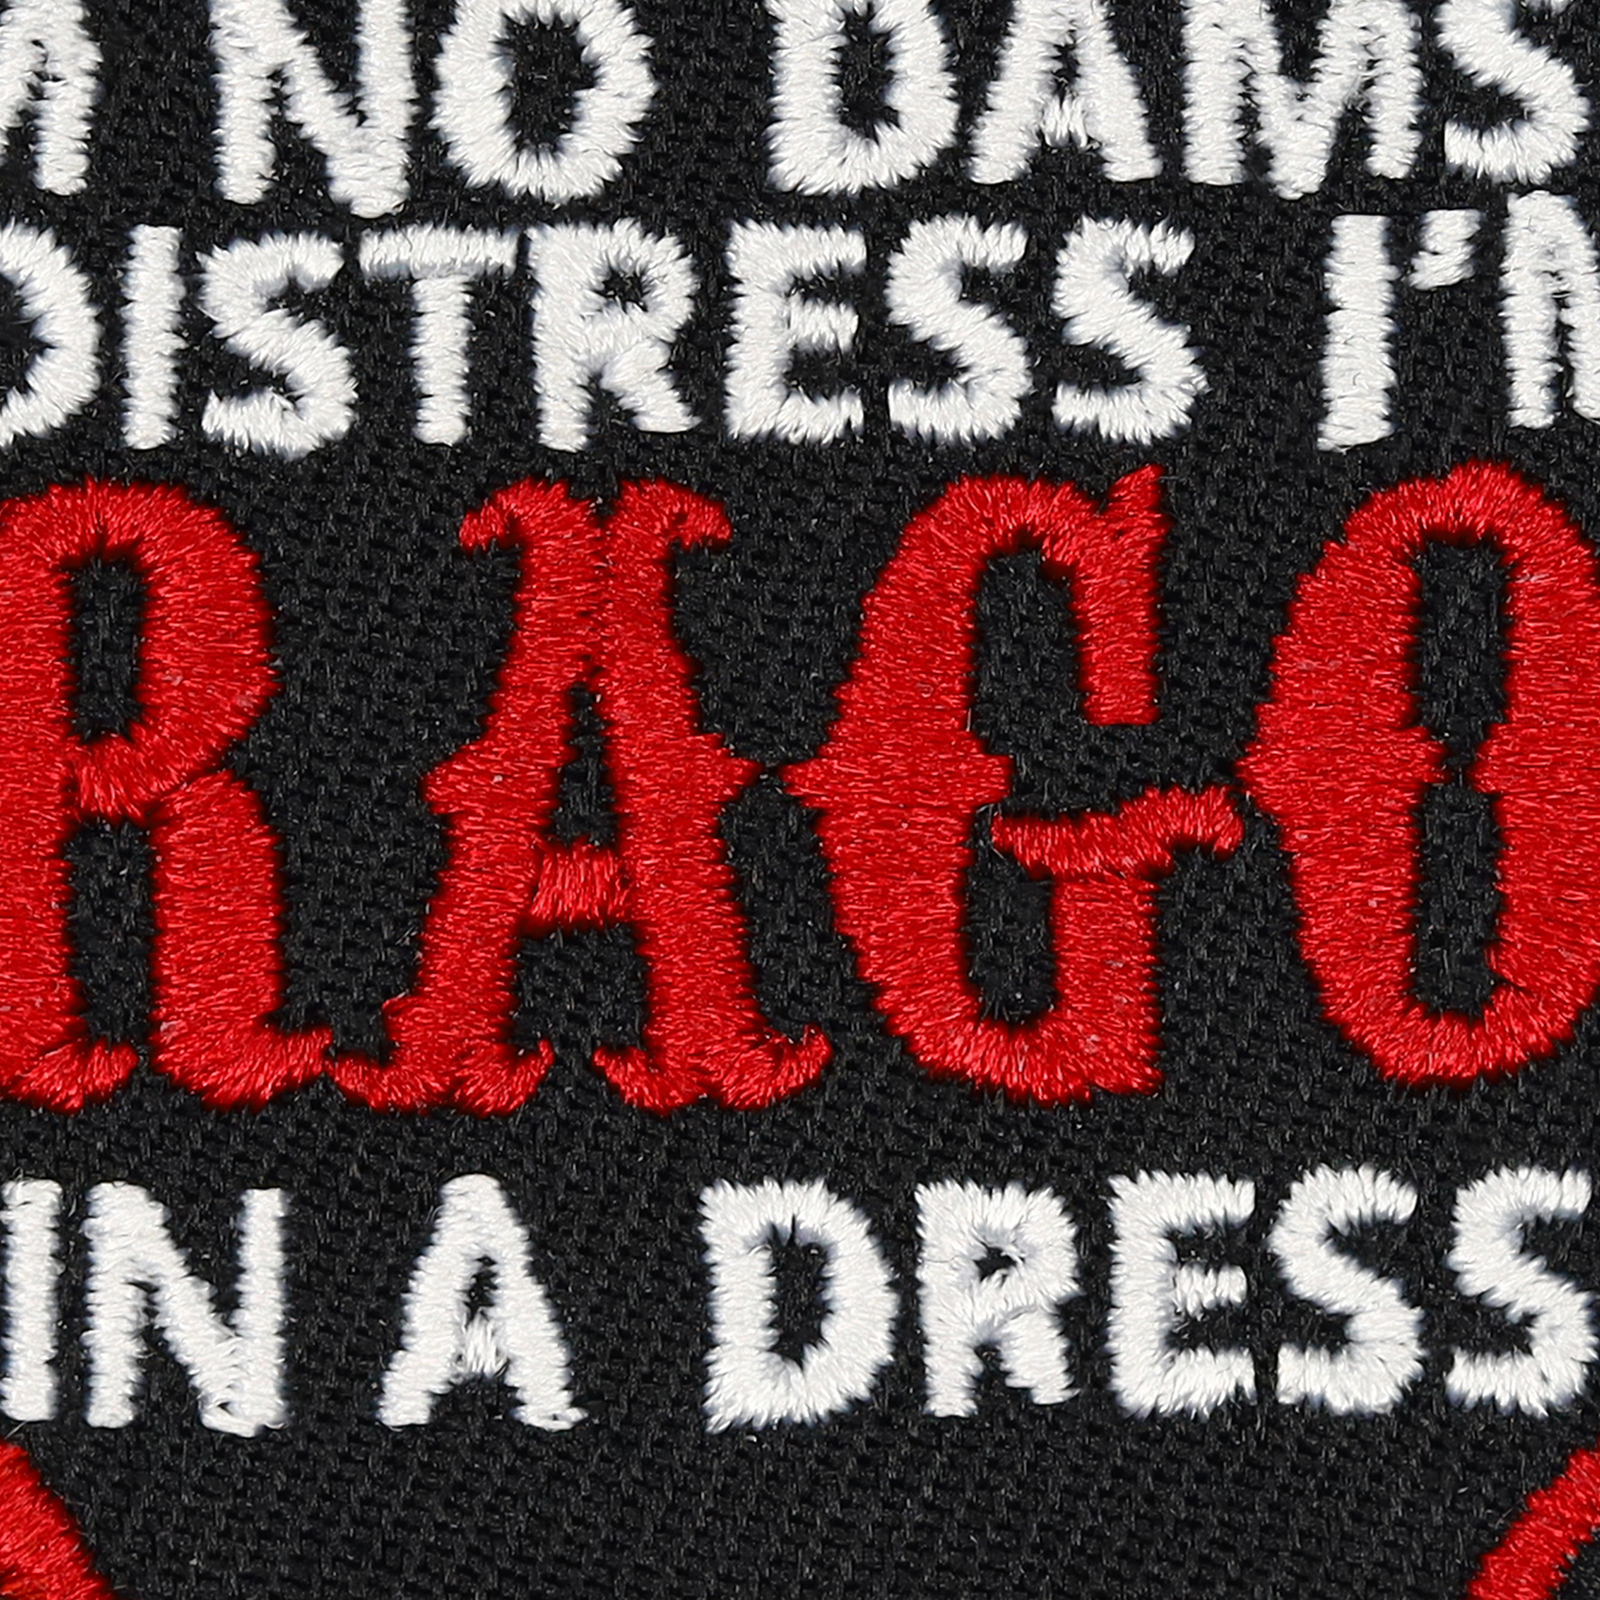 I'm no damsel in distress I'm a dragon in a dress - Patch